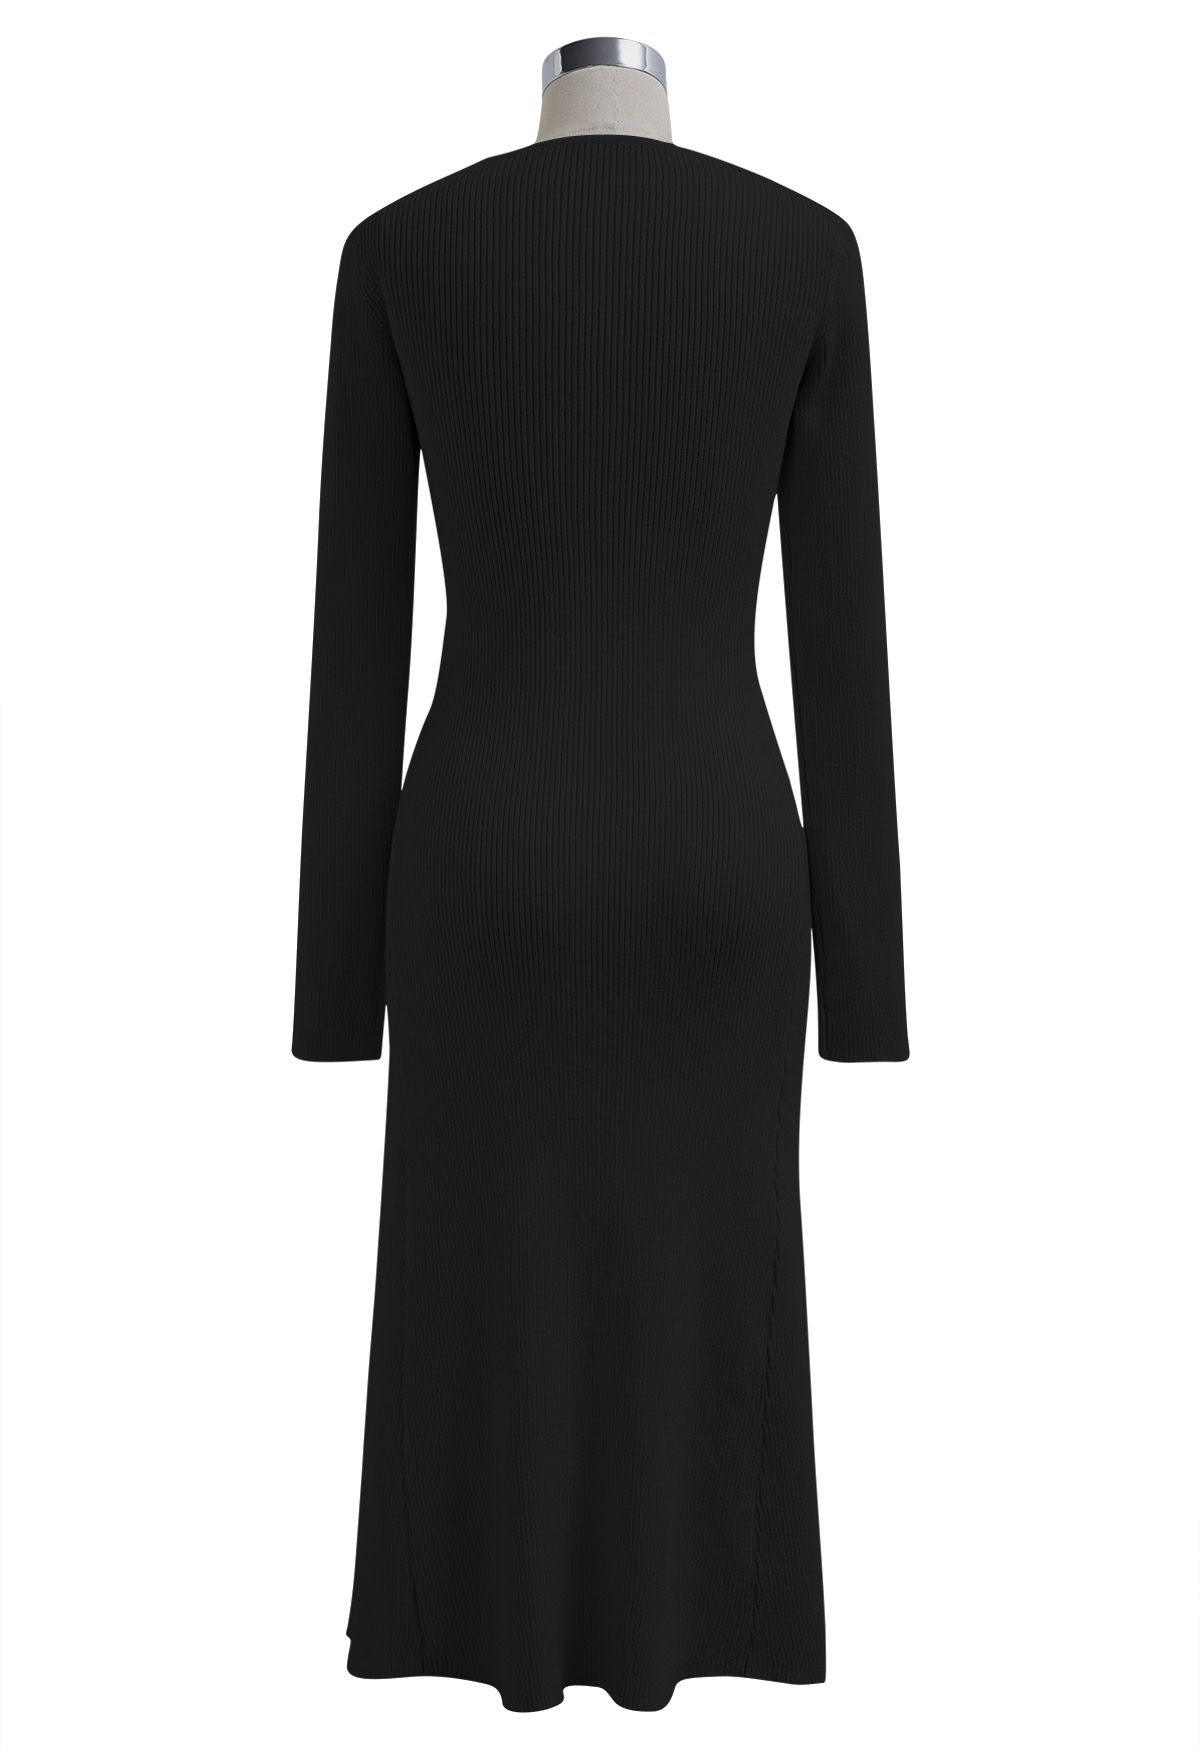 Asymmetric Cutout Neckline Rib Knit Midi Dress in Black